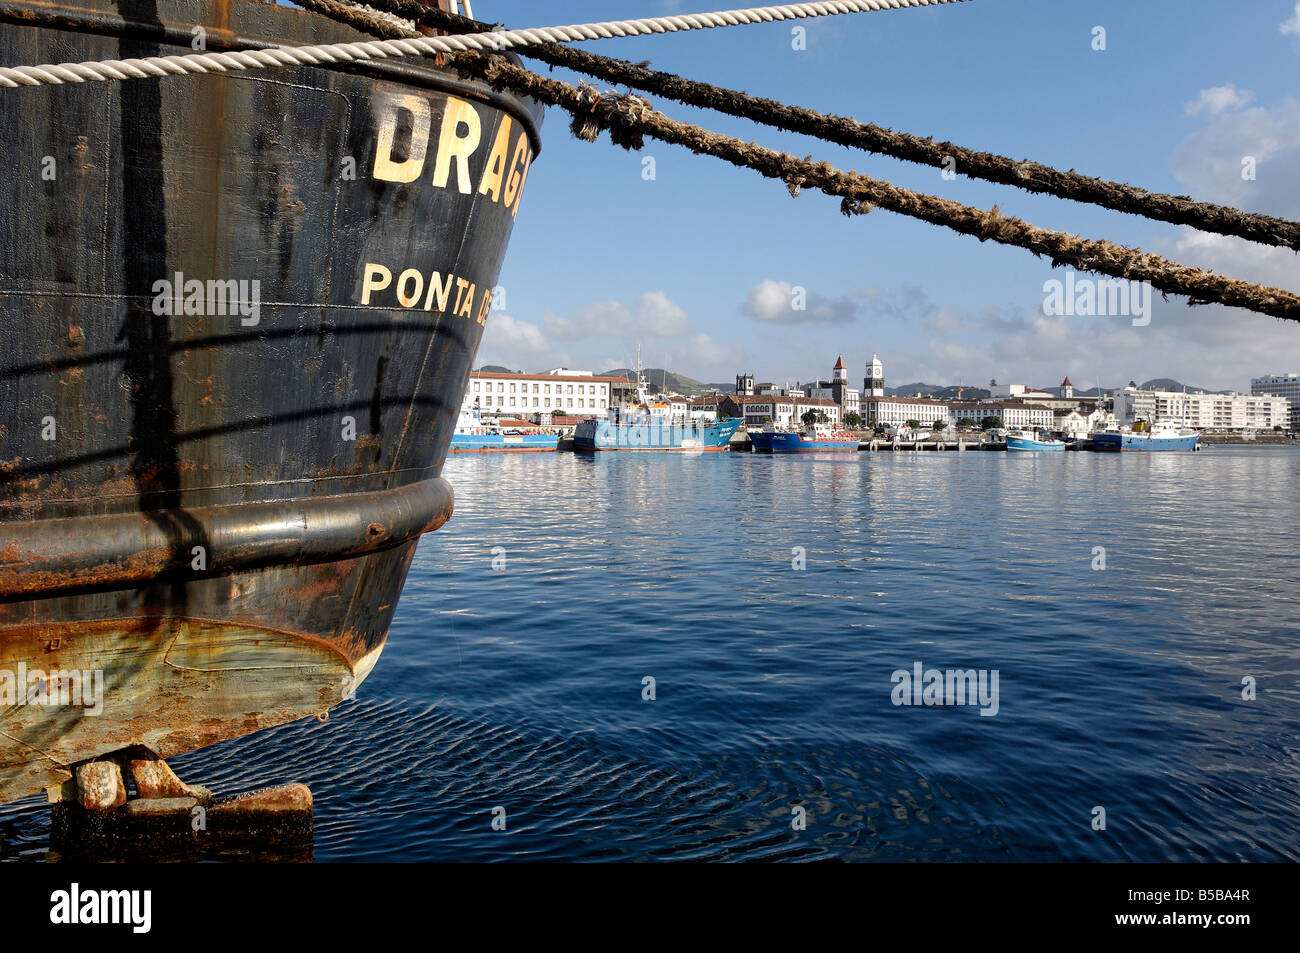 The harbour, Ponta Delgada, Sao Miguel Island, Azores, Portugal, Europe Stock Photo